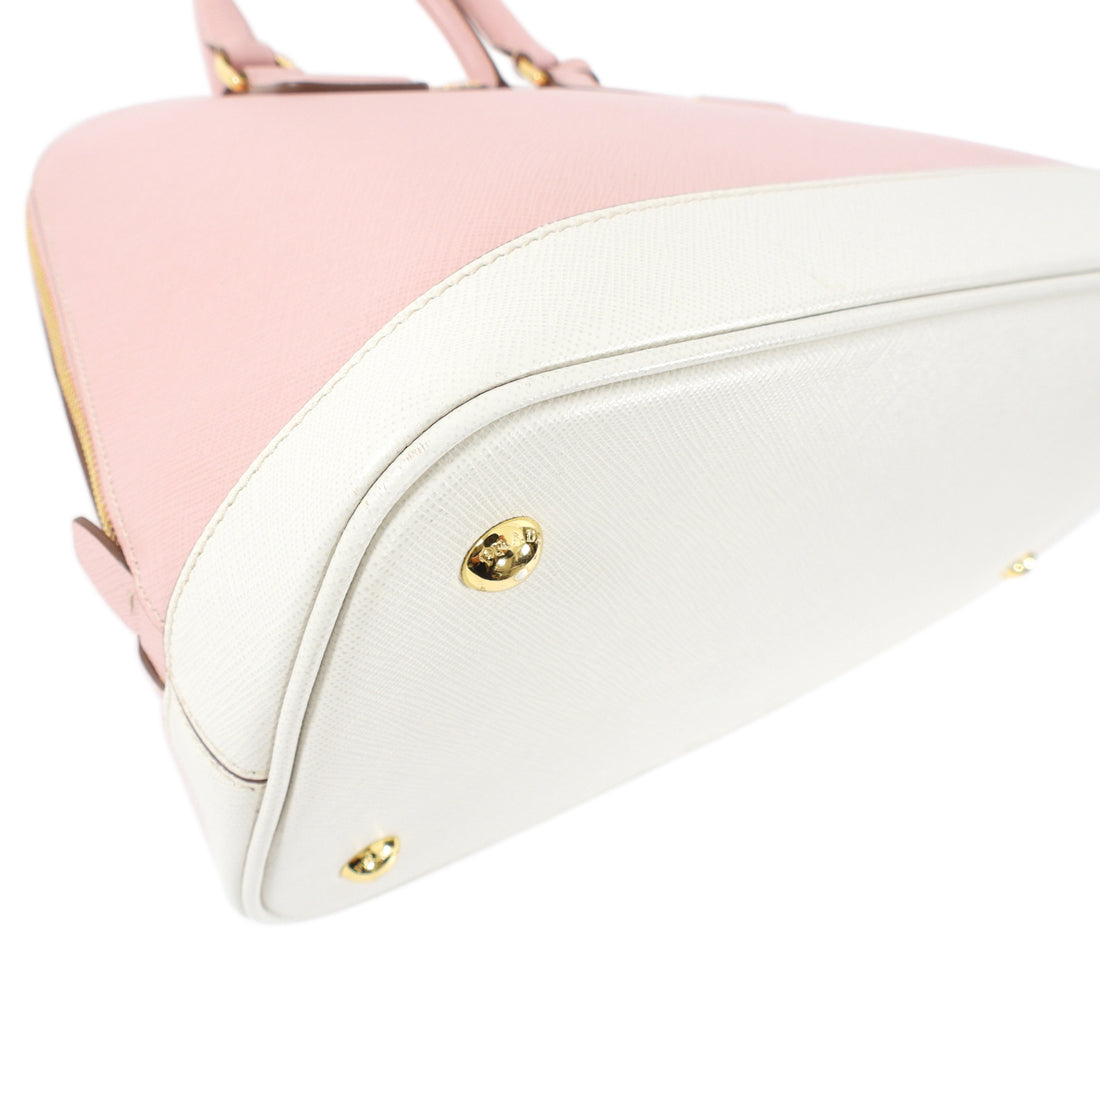 Prada Pink and White Saffiano Leather Promenade Bag